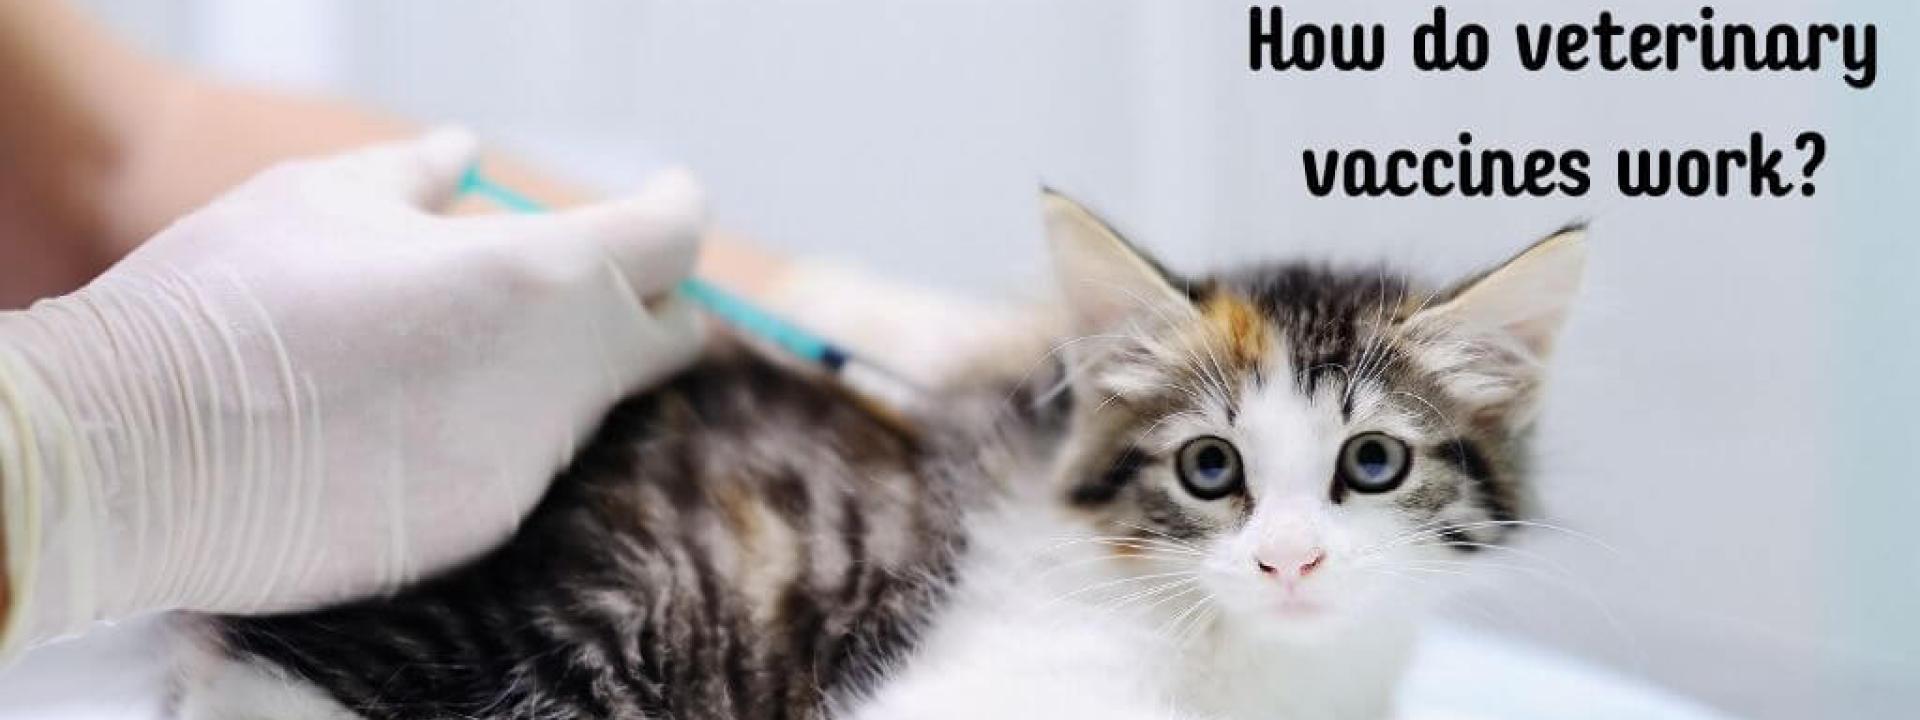 Kitten receiving vaccine at the vet